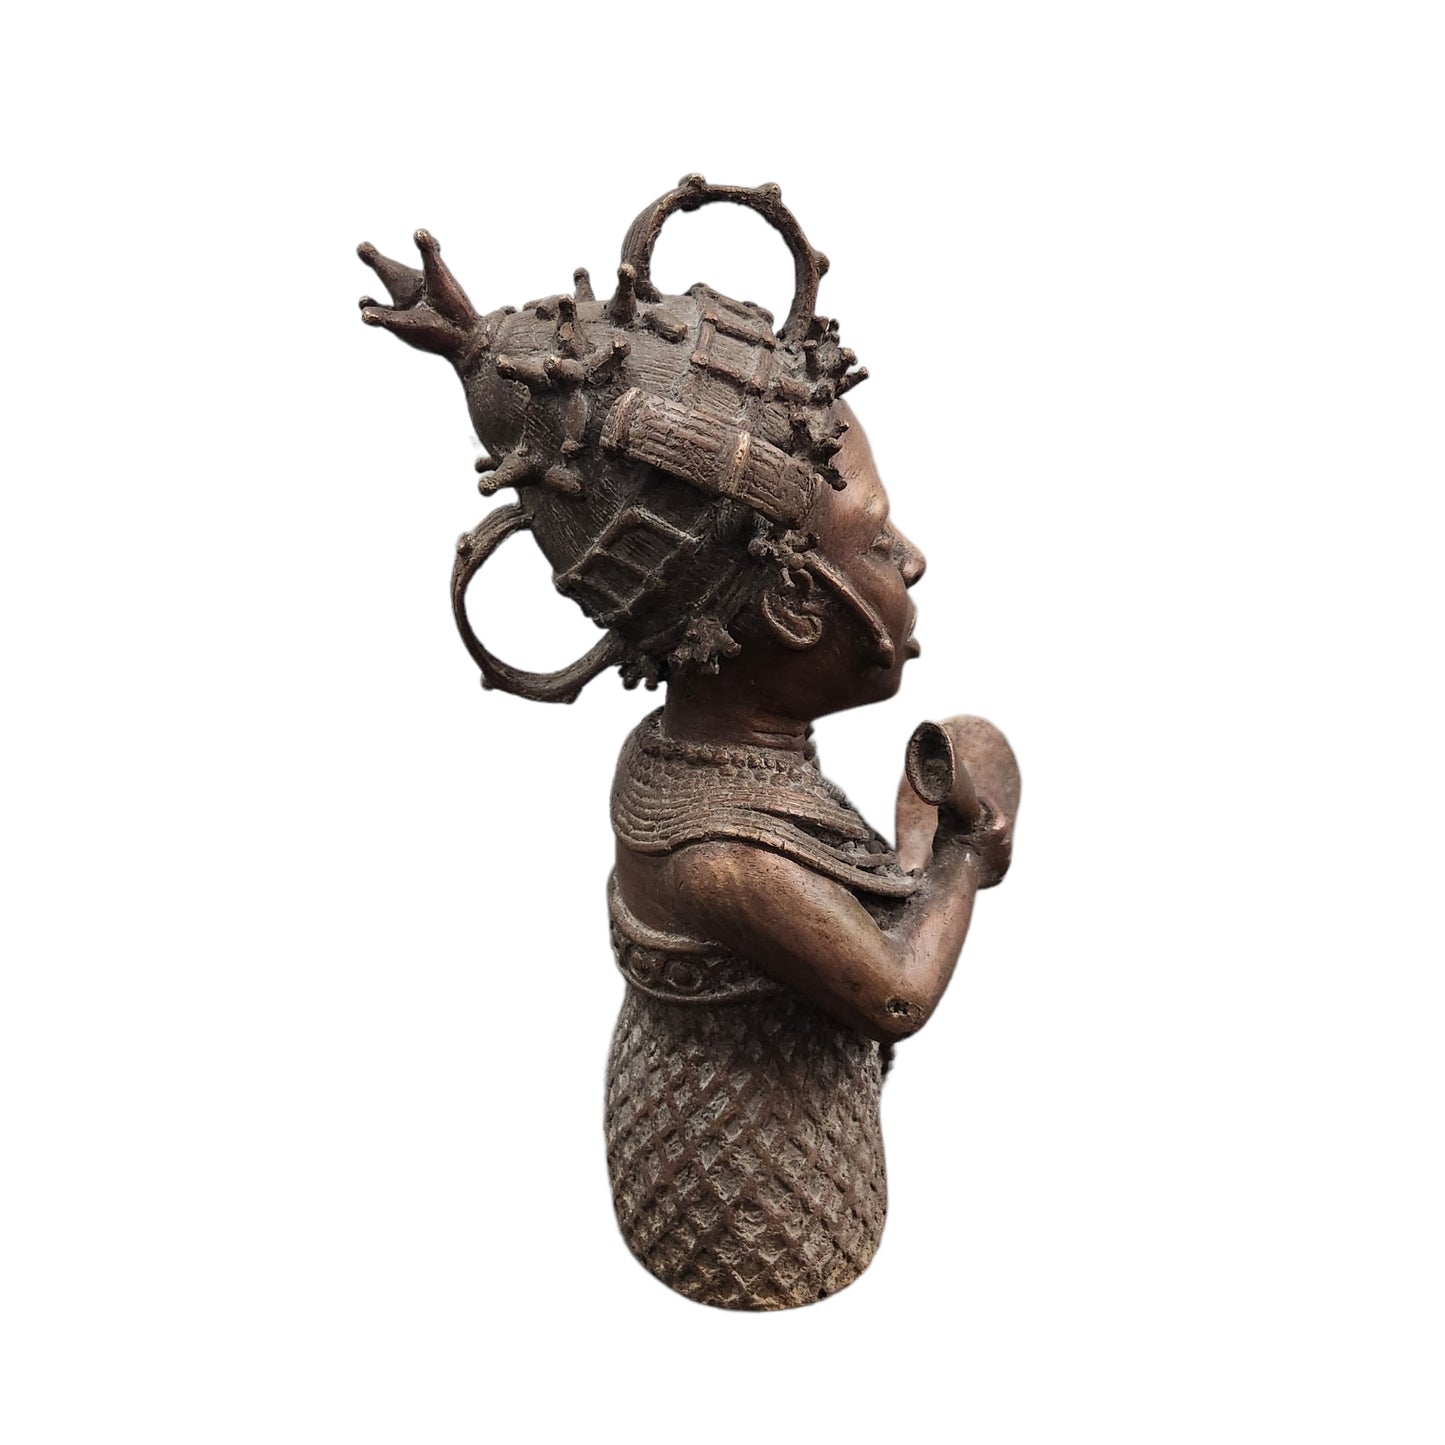 Benin Bronze Statue from Nigeria (18th Century) - MD African Art